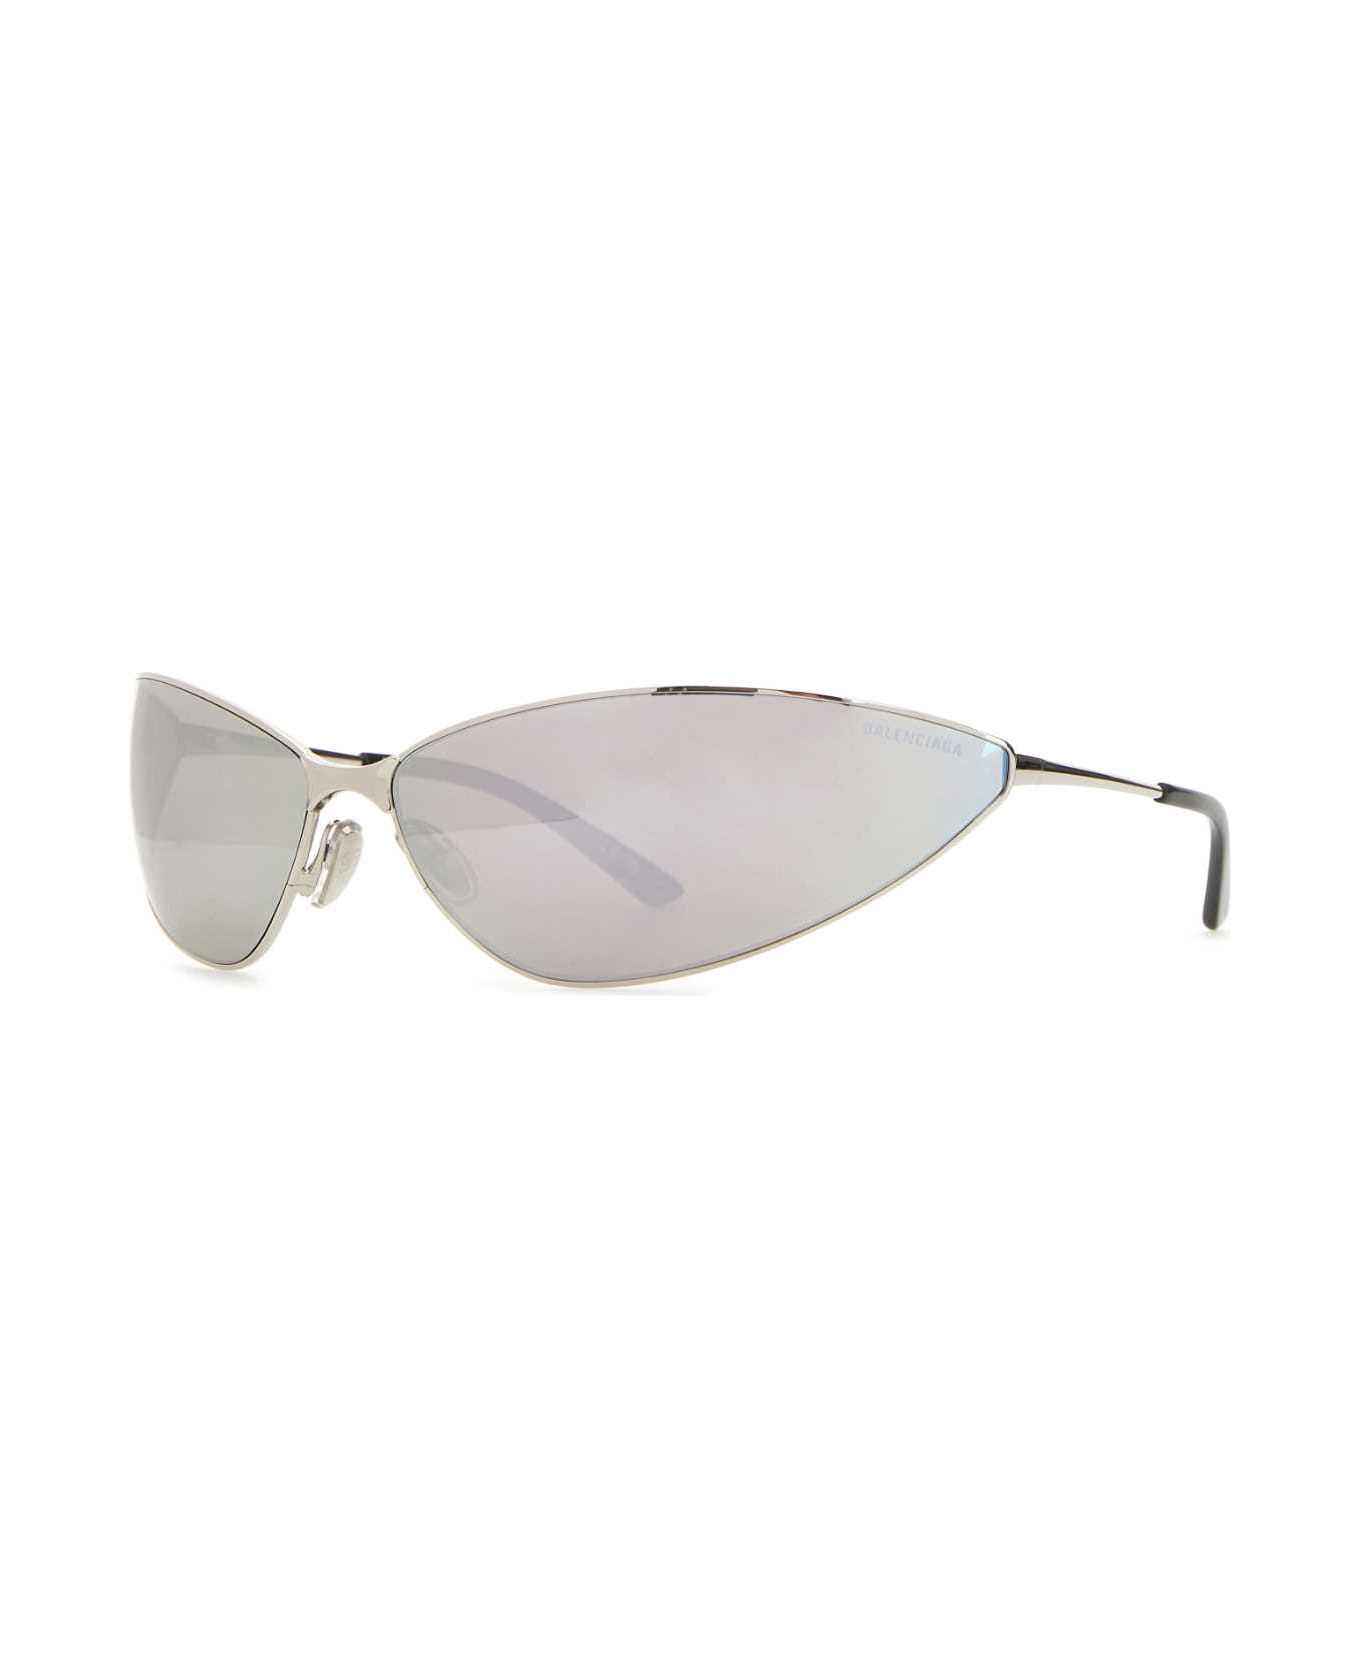 Balenciaga Silver Metal Razor Sunglasses - SILVER